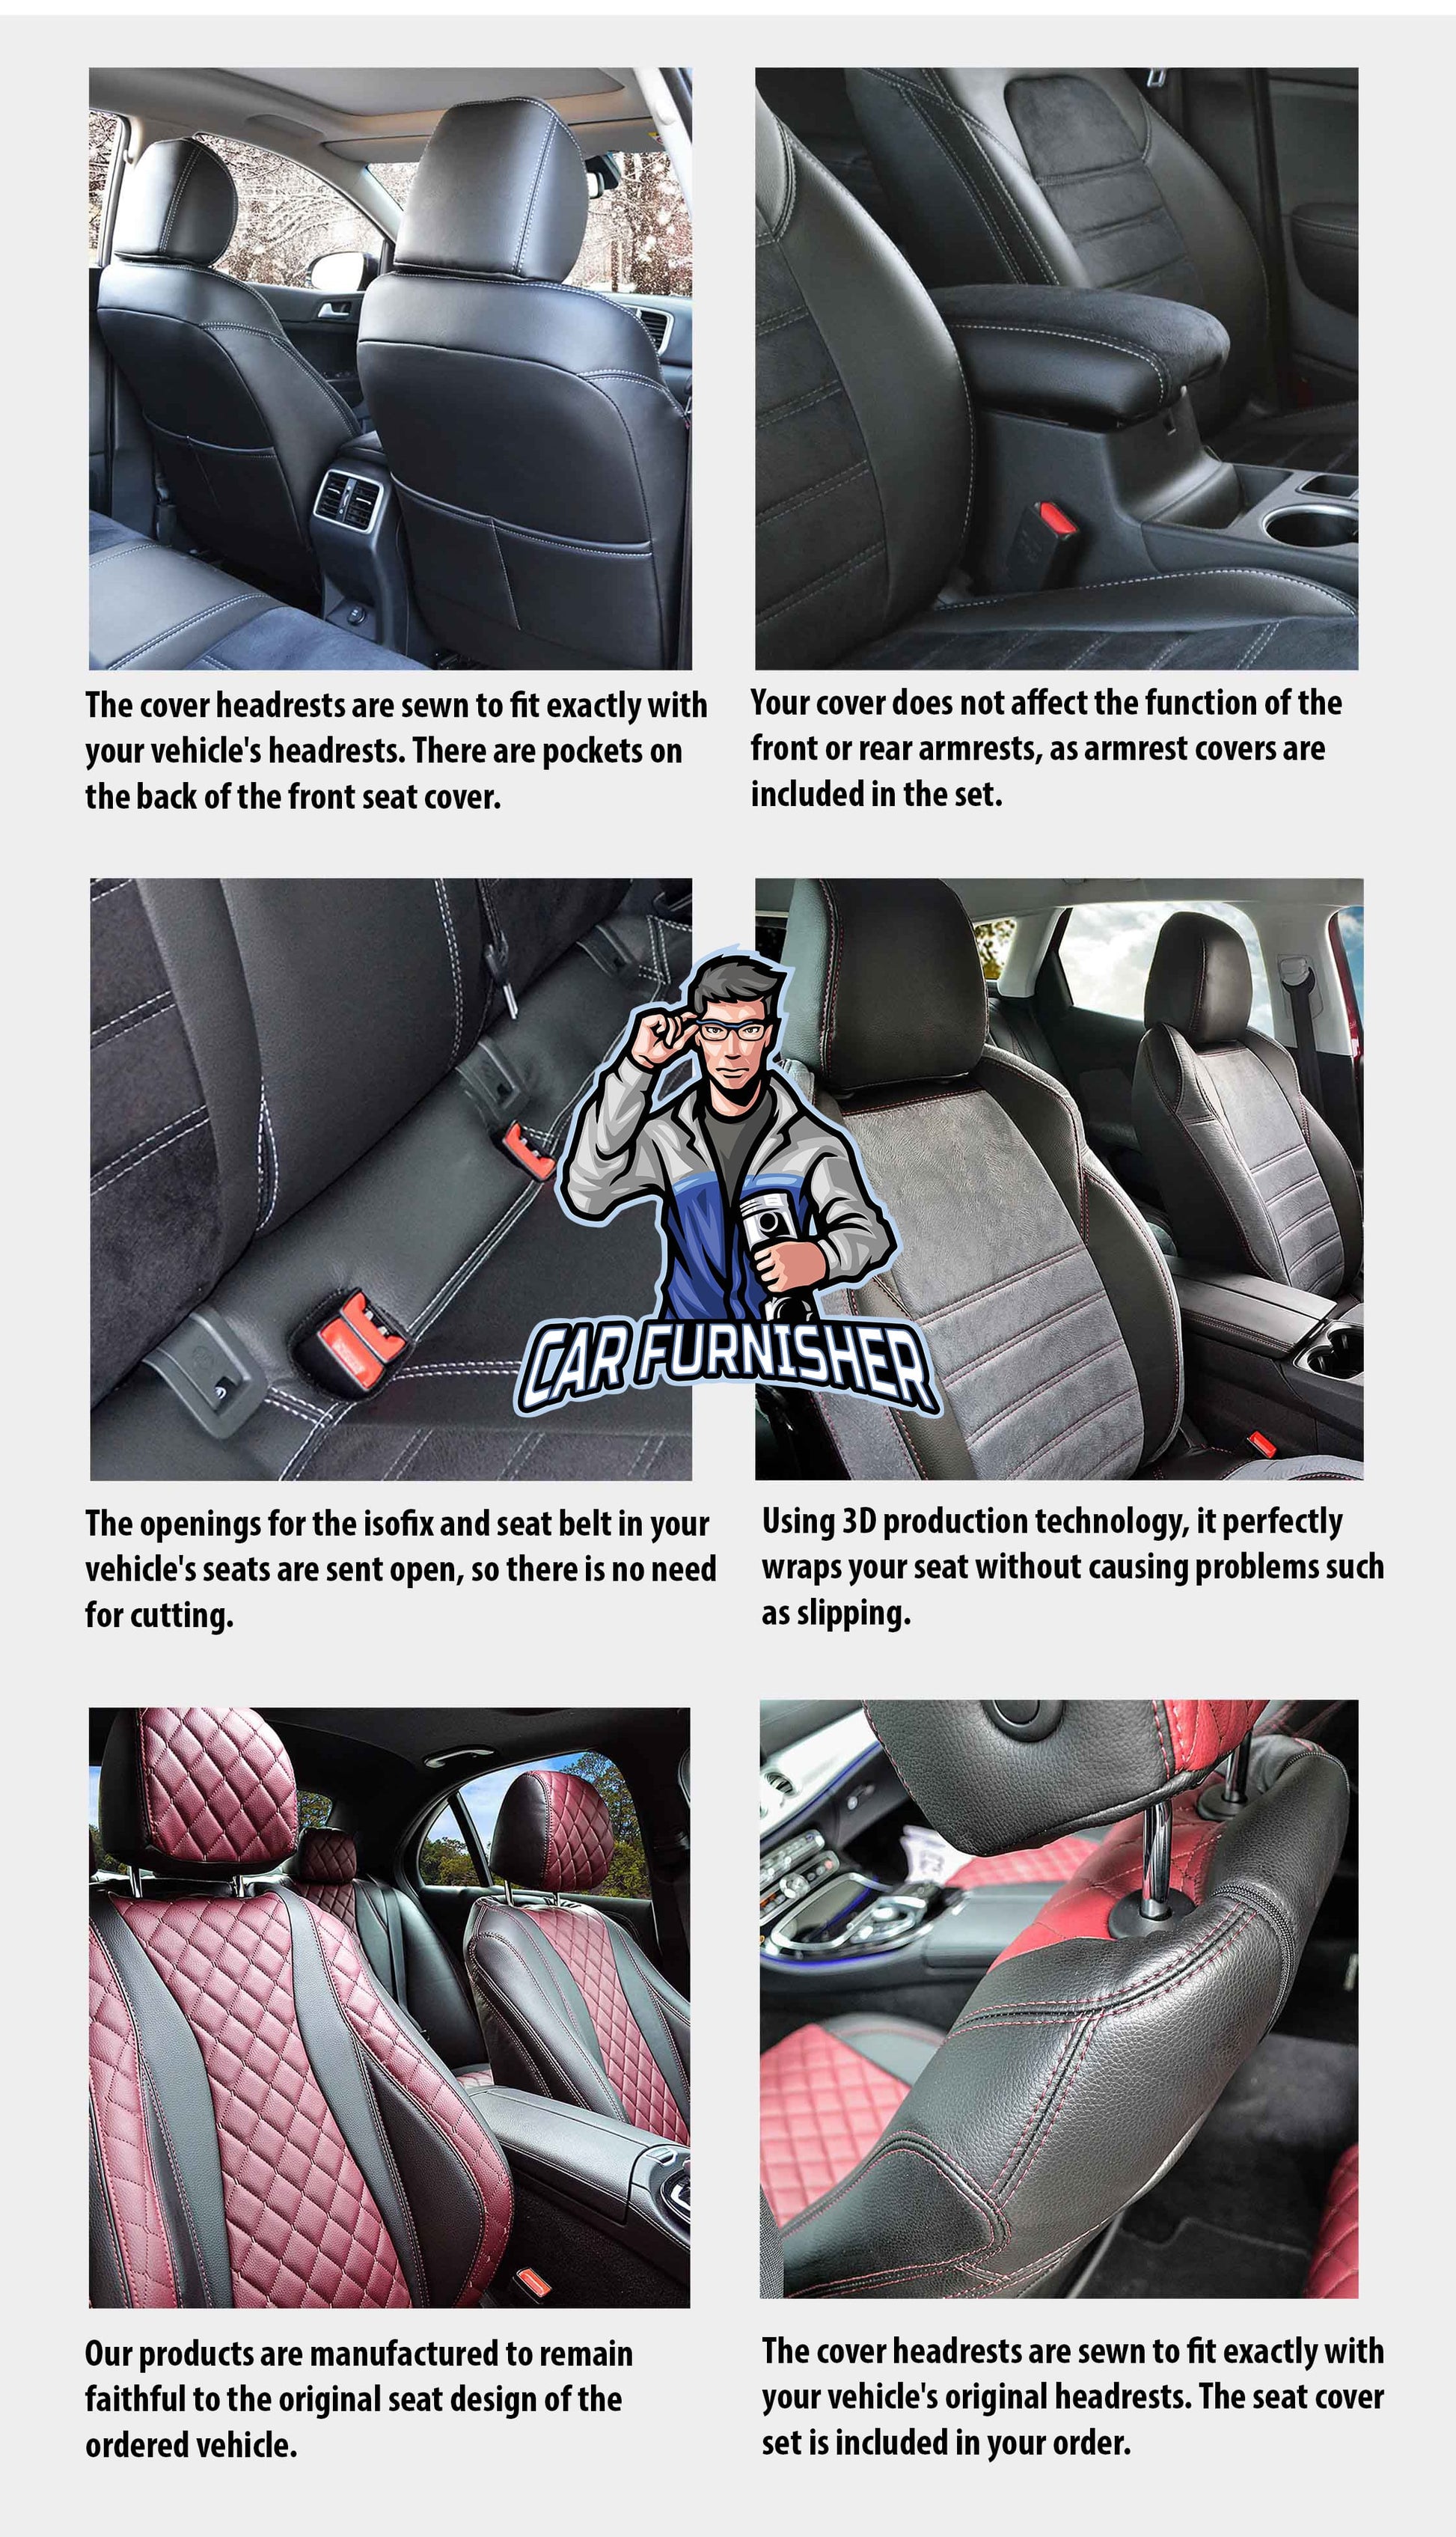 Hyundai Elantra Seat Covers Amsterdam Leather Design Smoked Black Leather